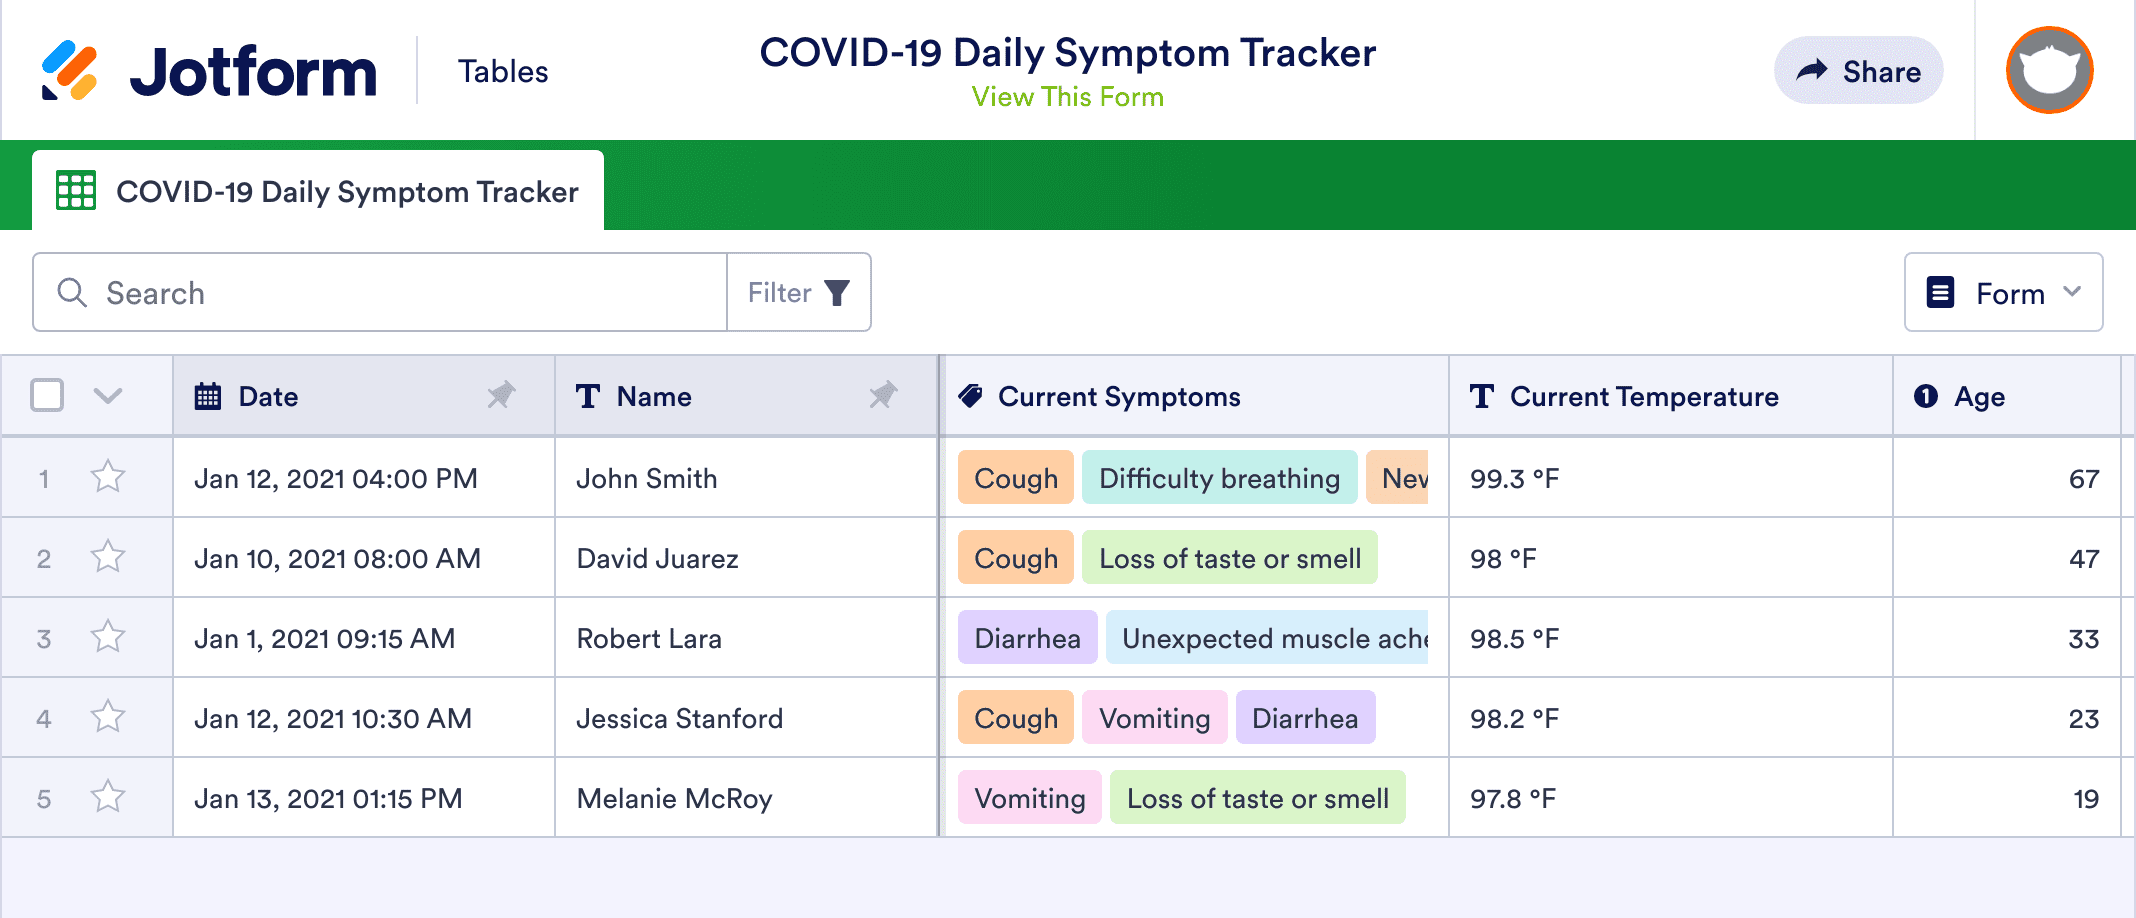 COVID-19 Daily Symptom Tracker